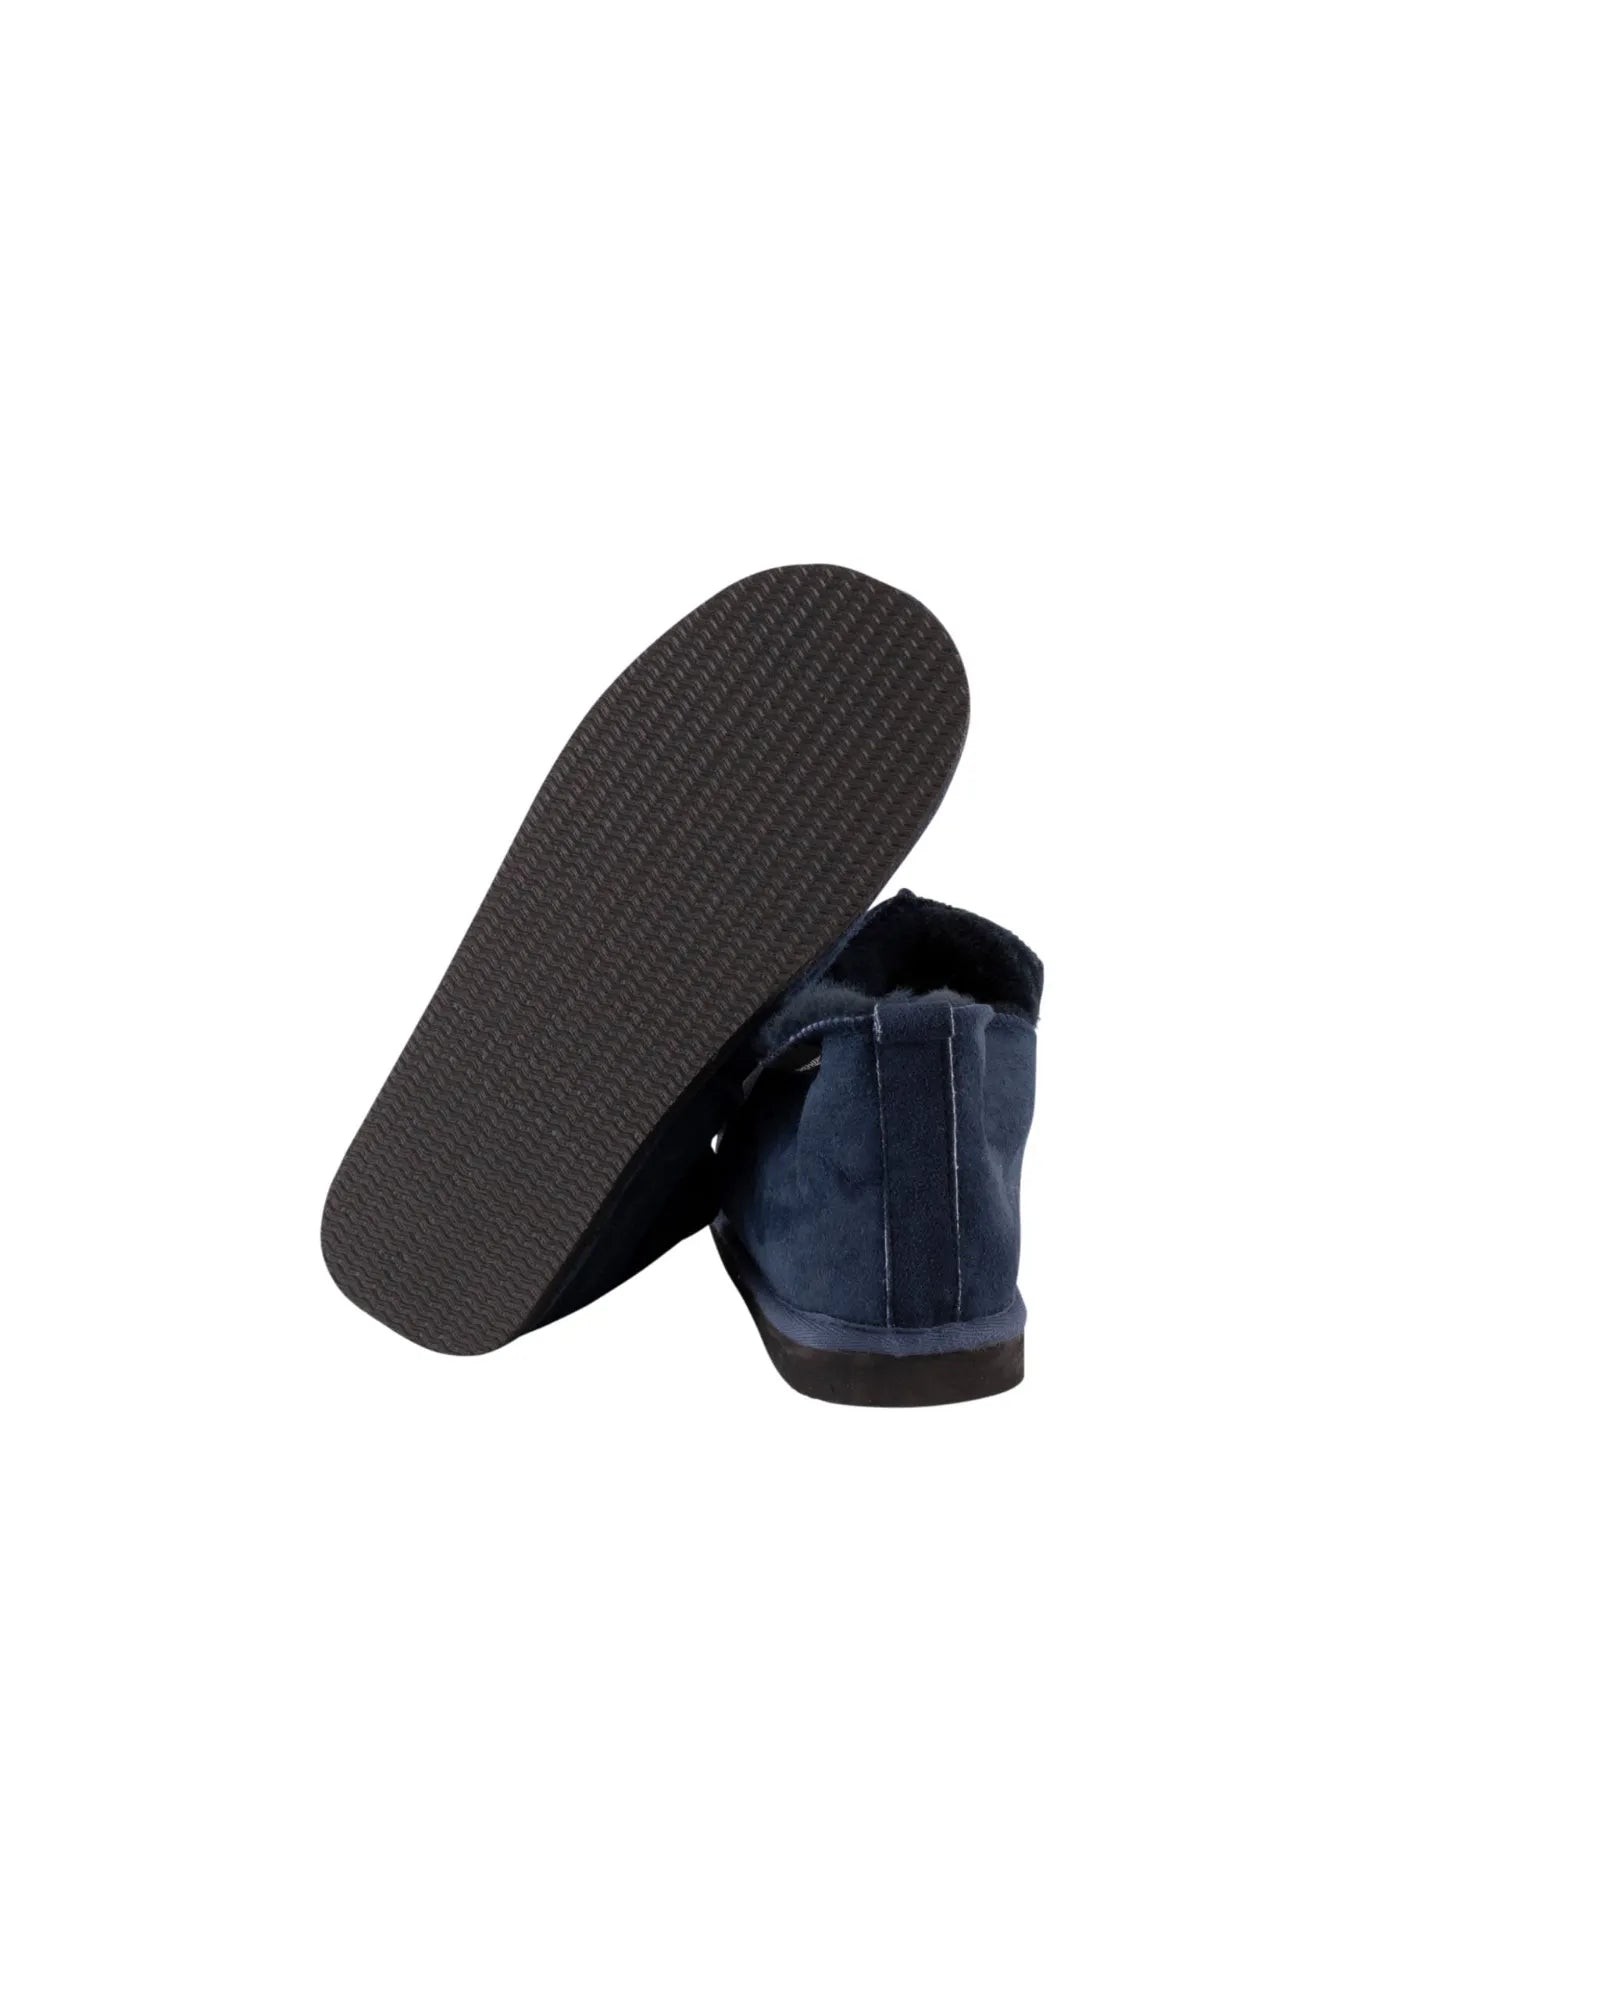 Anton Soft Ankle Slippers - Dark Navy